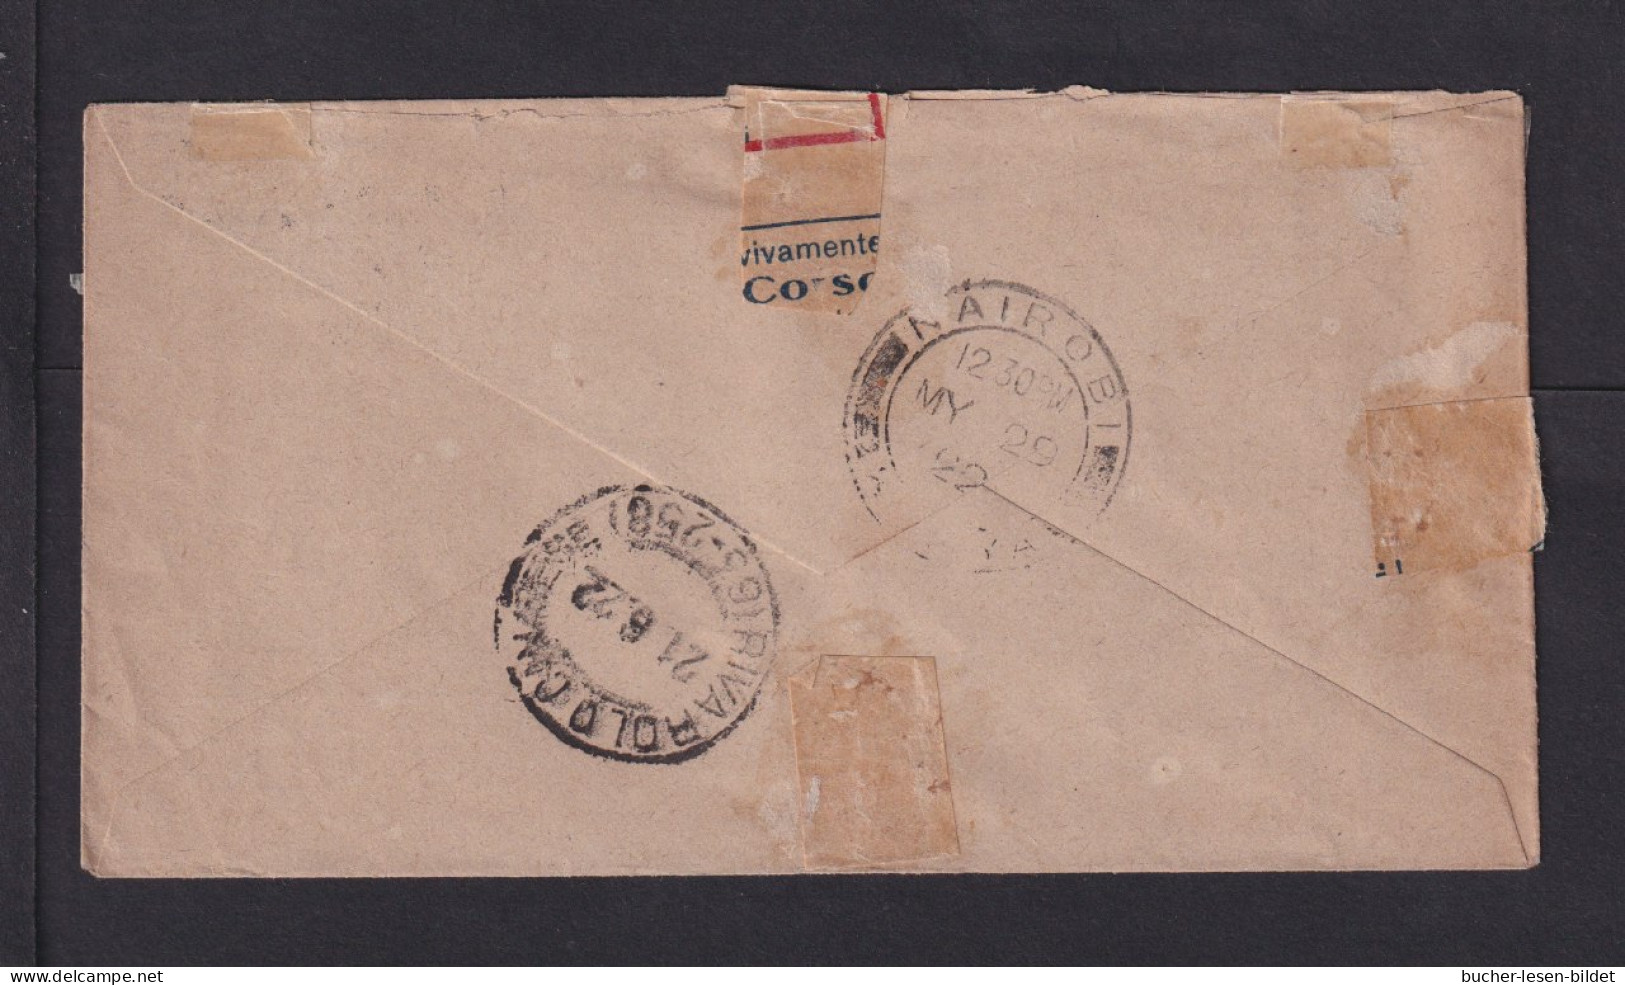 1922 - 15 C. Auf Brief Ab NYERE Nach Italien - Protectorats D'Afrique Orientale Et D'Ouganda